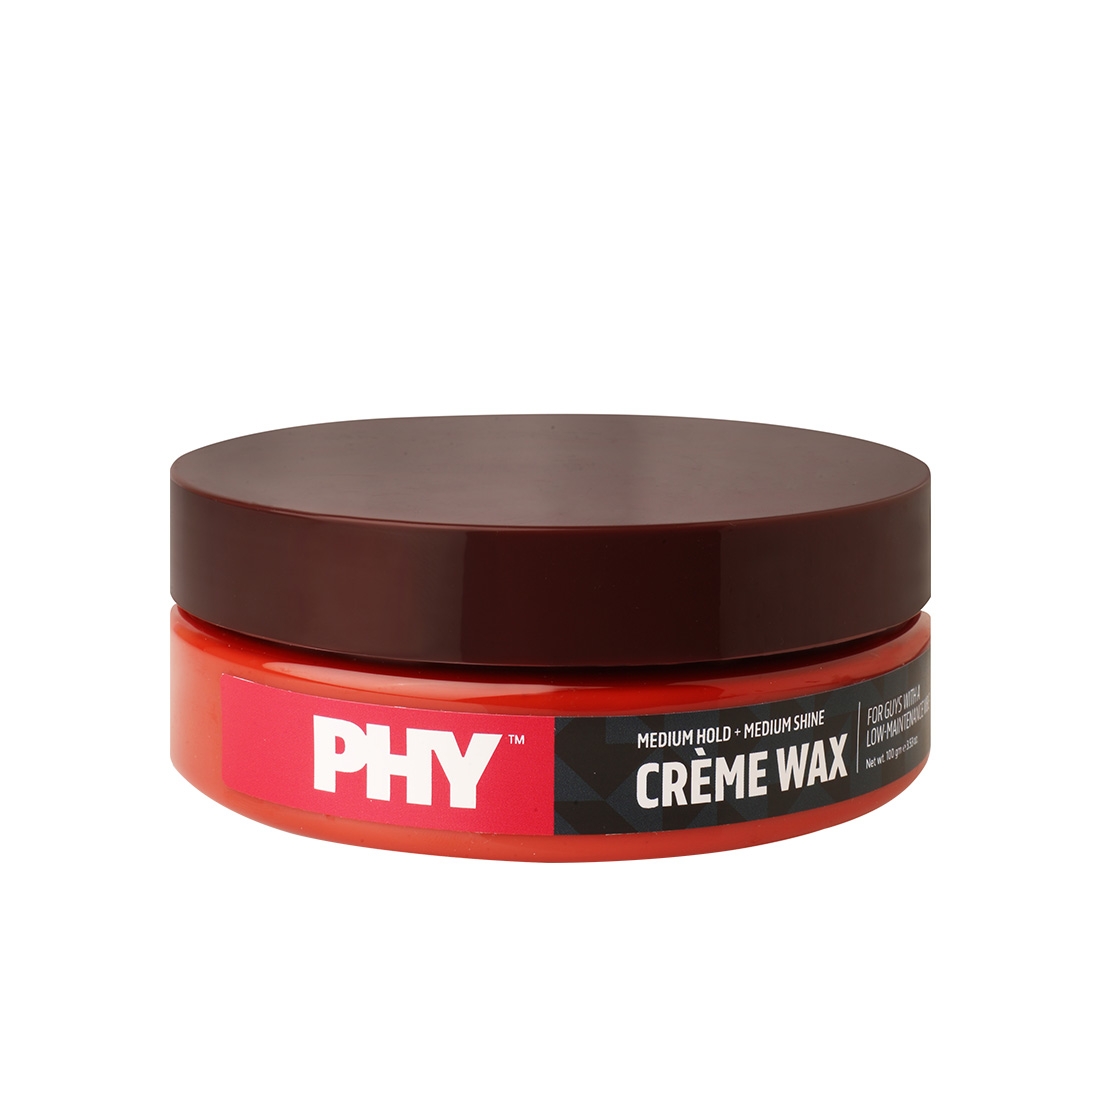 Phy Creme Wax | Medium Hold + Medium Shine